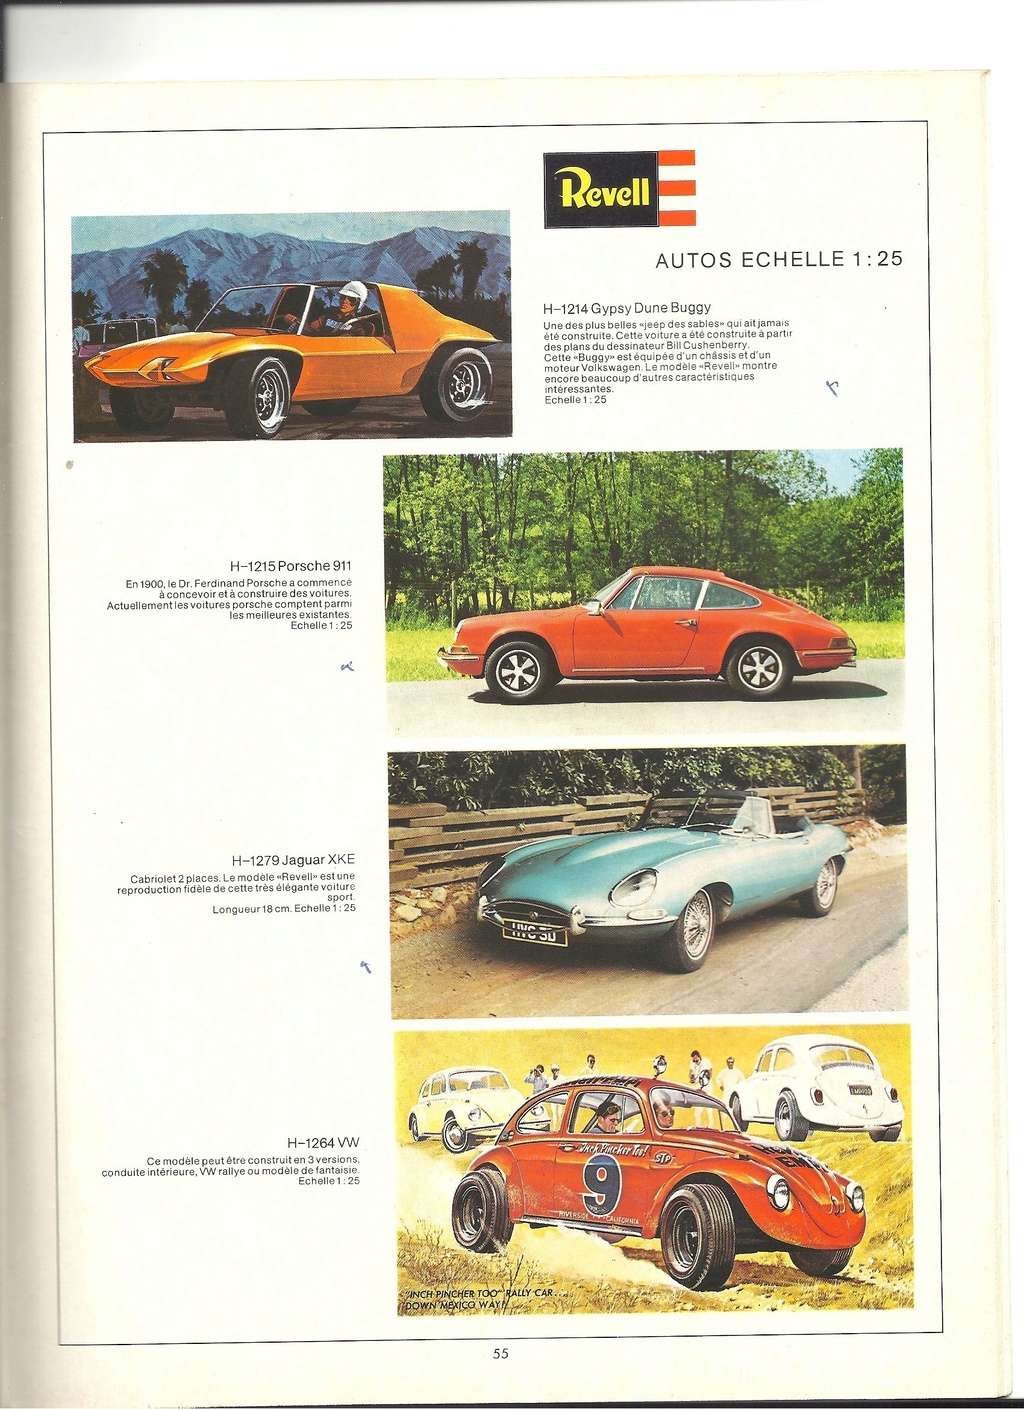 [REVELL 1972] Catalogue 1972  Revel631